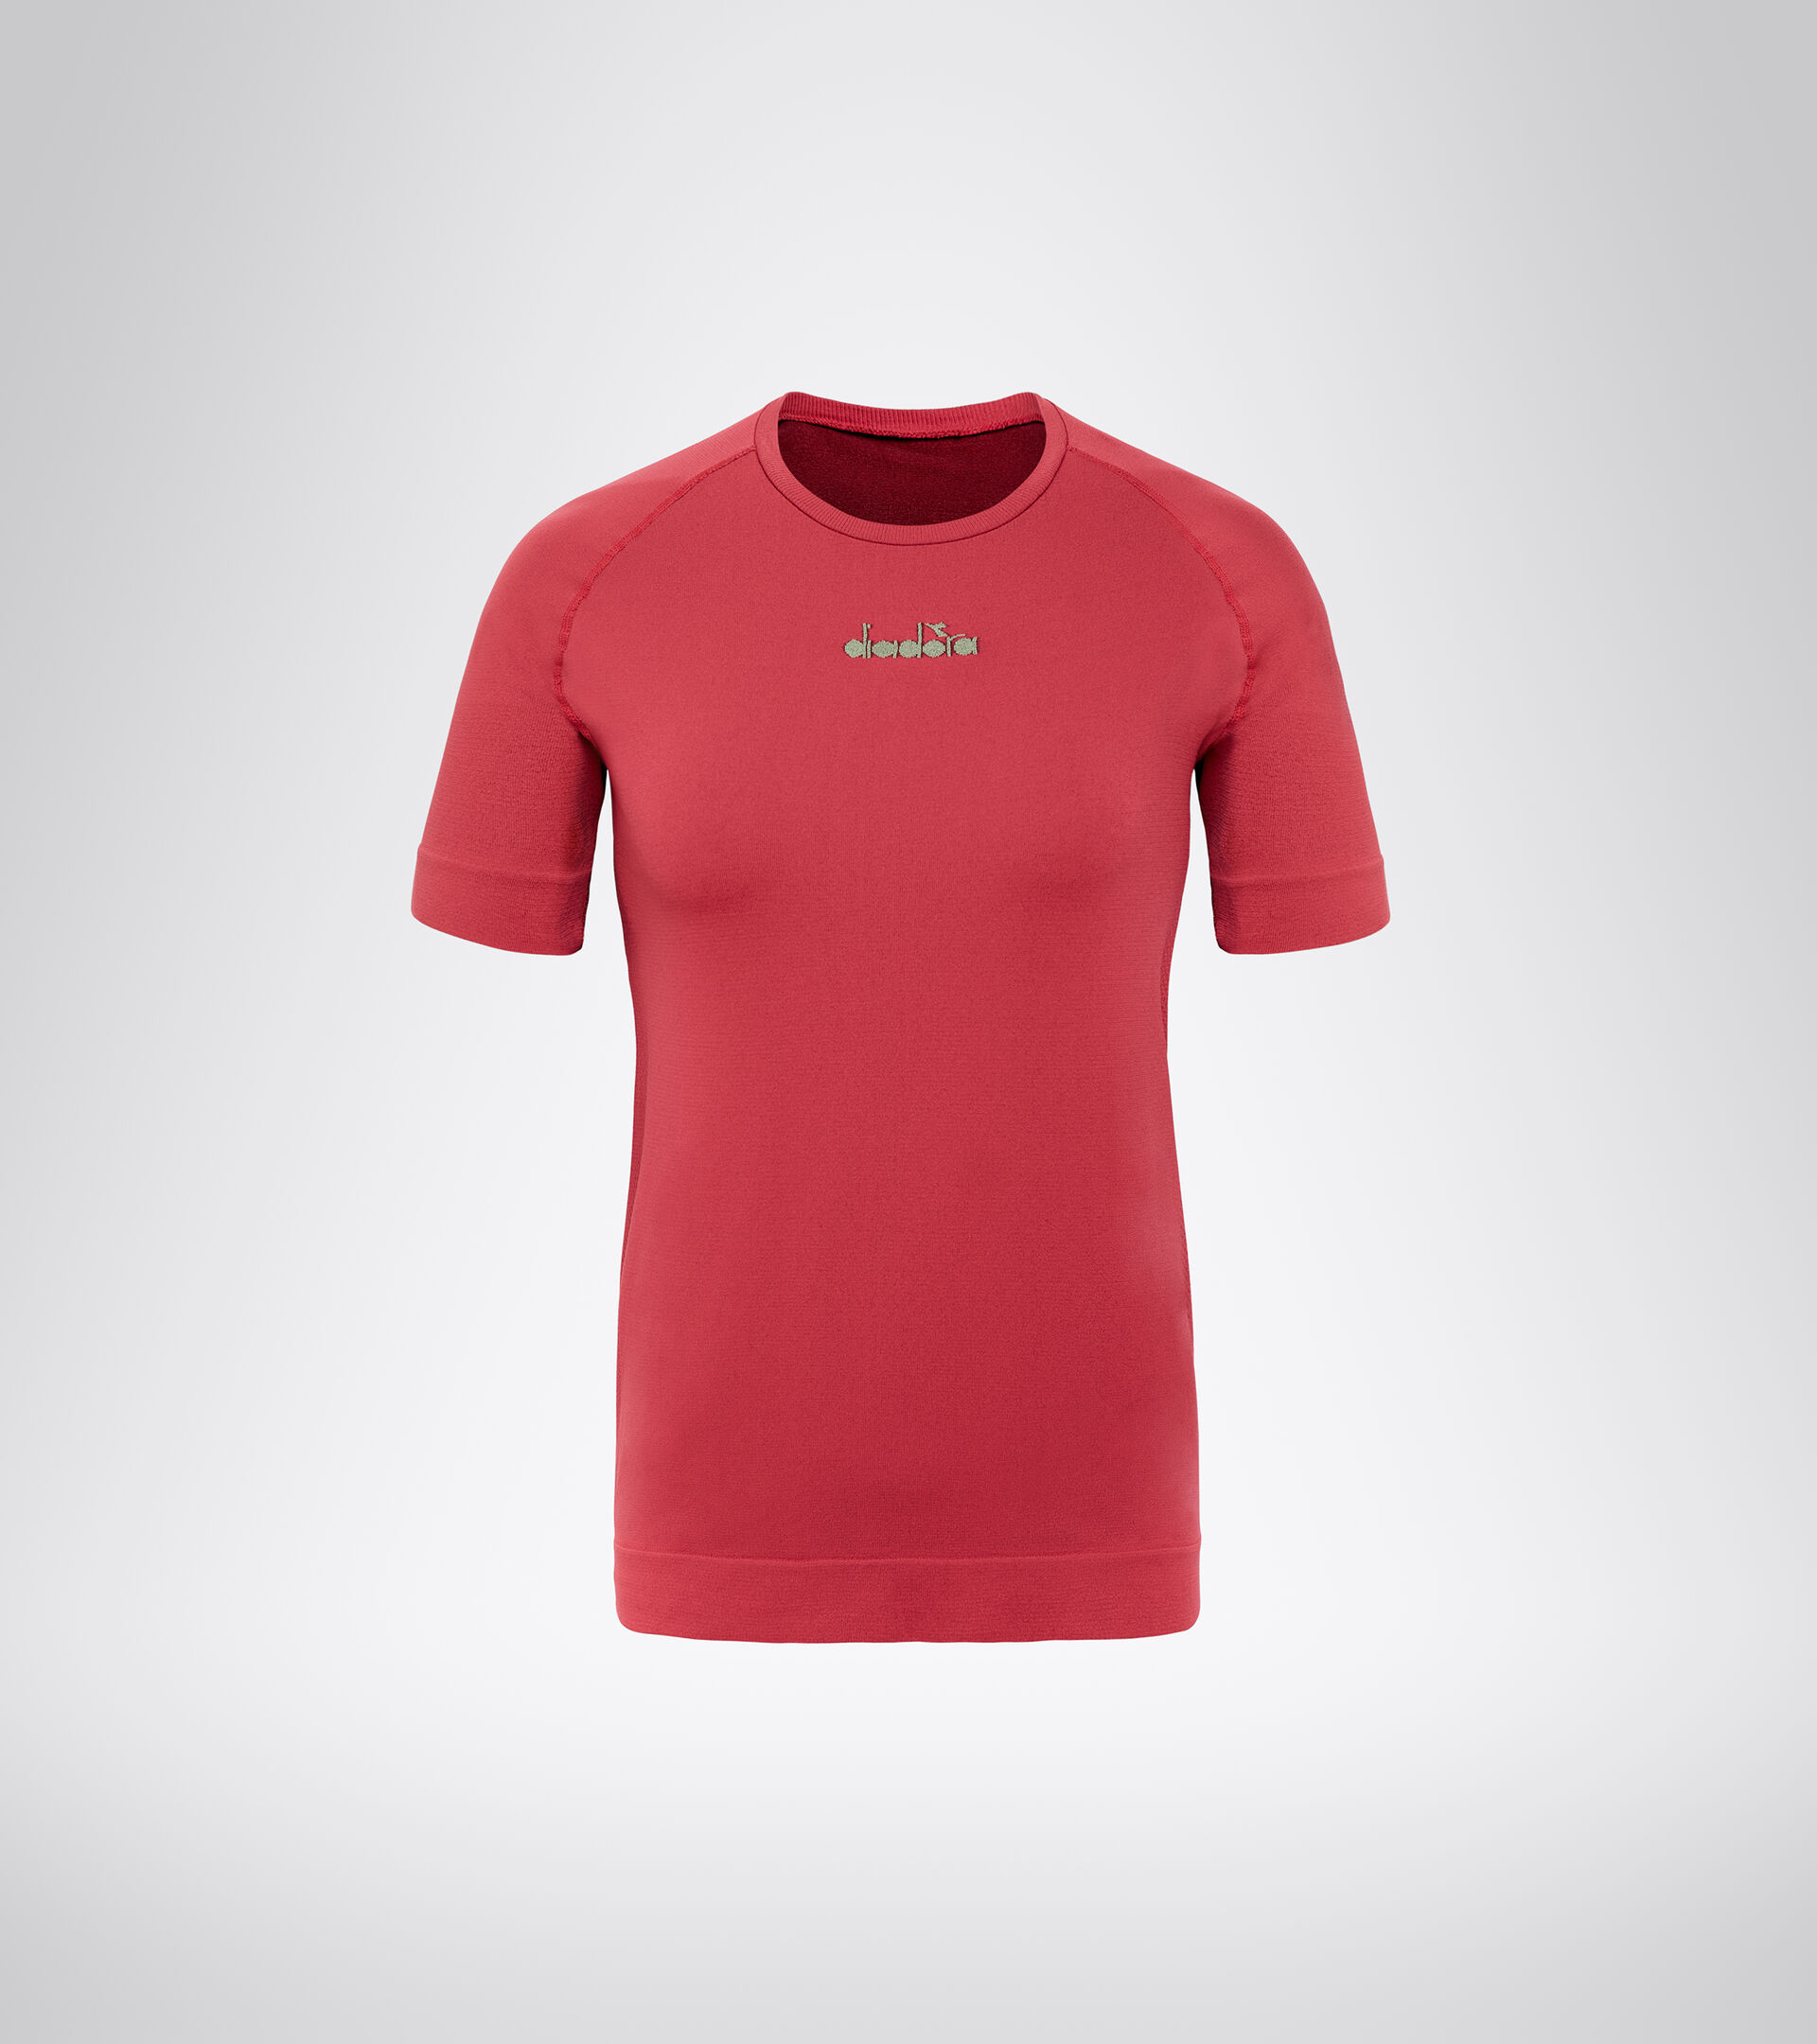 T-shirt de running Made in Italy - Femme L. SS SKIN FRIENDLY T-SHIRT ROSE VOYANT - Diadora